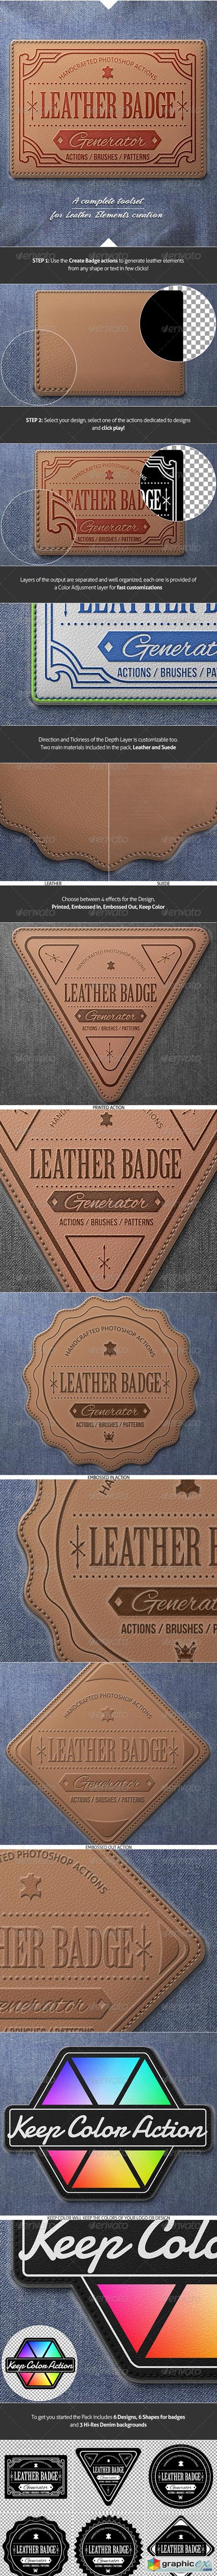 Leather Badge Generator - Photoshop Actions 8376002